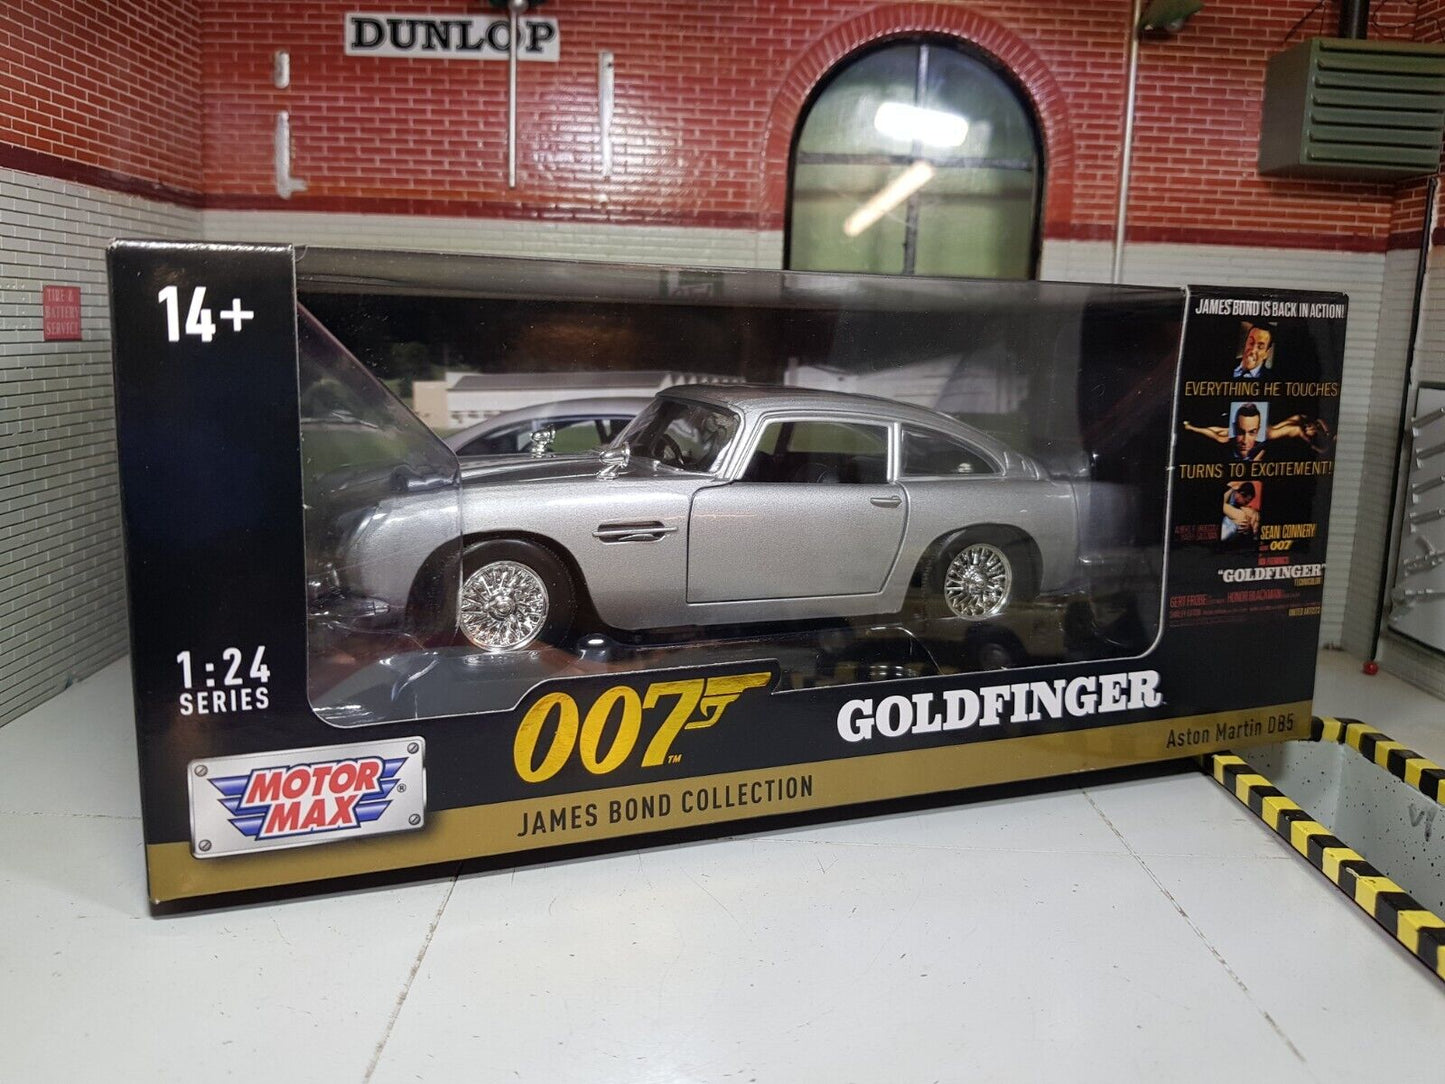 Aston Martin DB5 James Bond Collection Goldfinger Motormax 79857 1:24